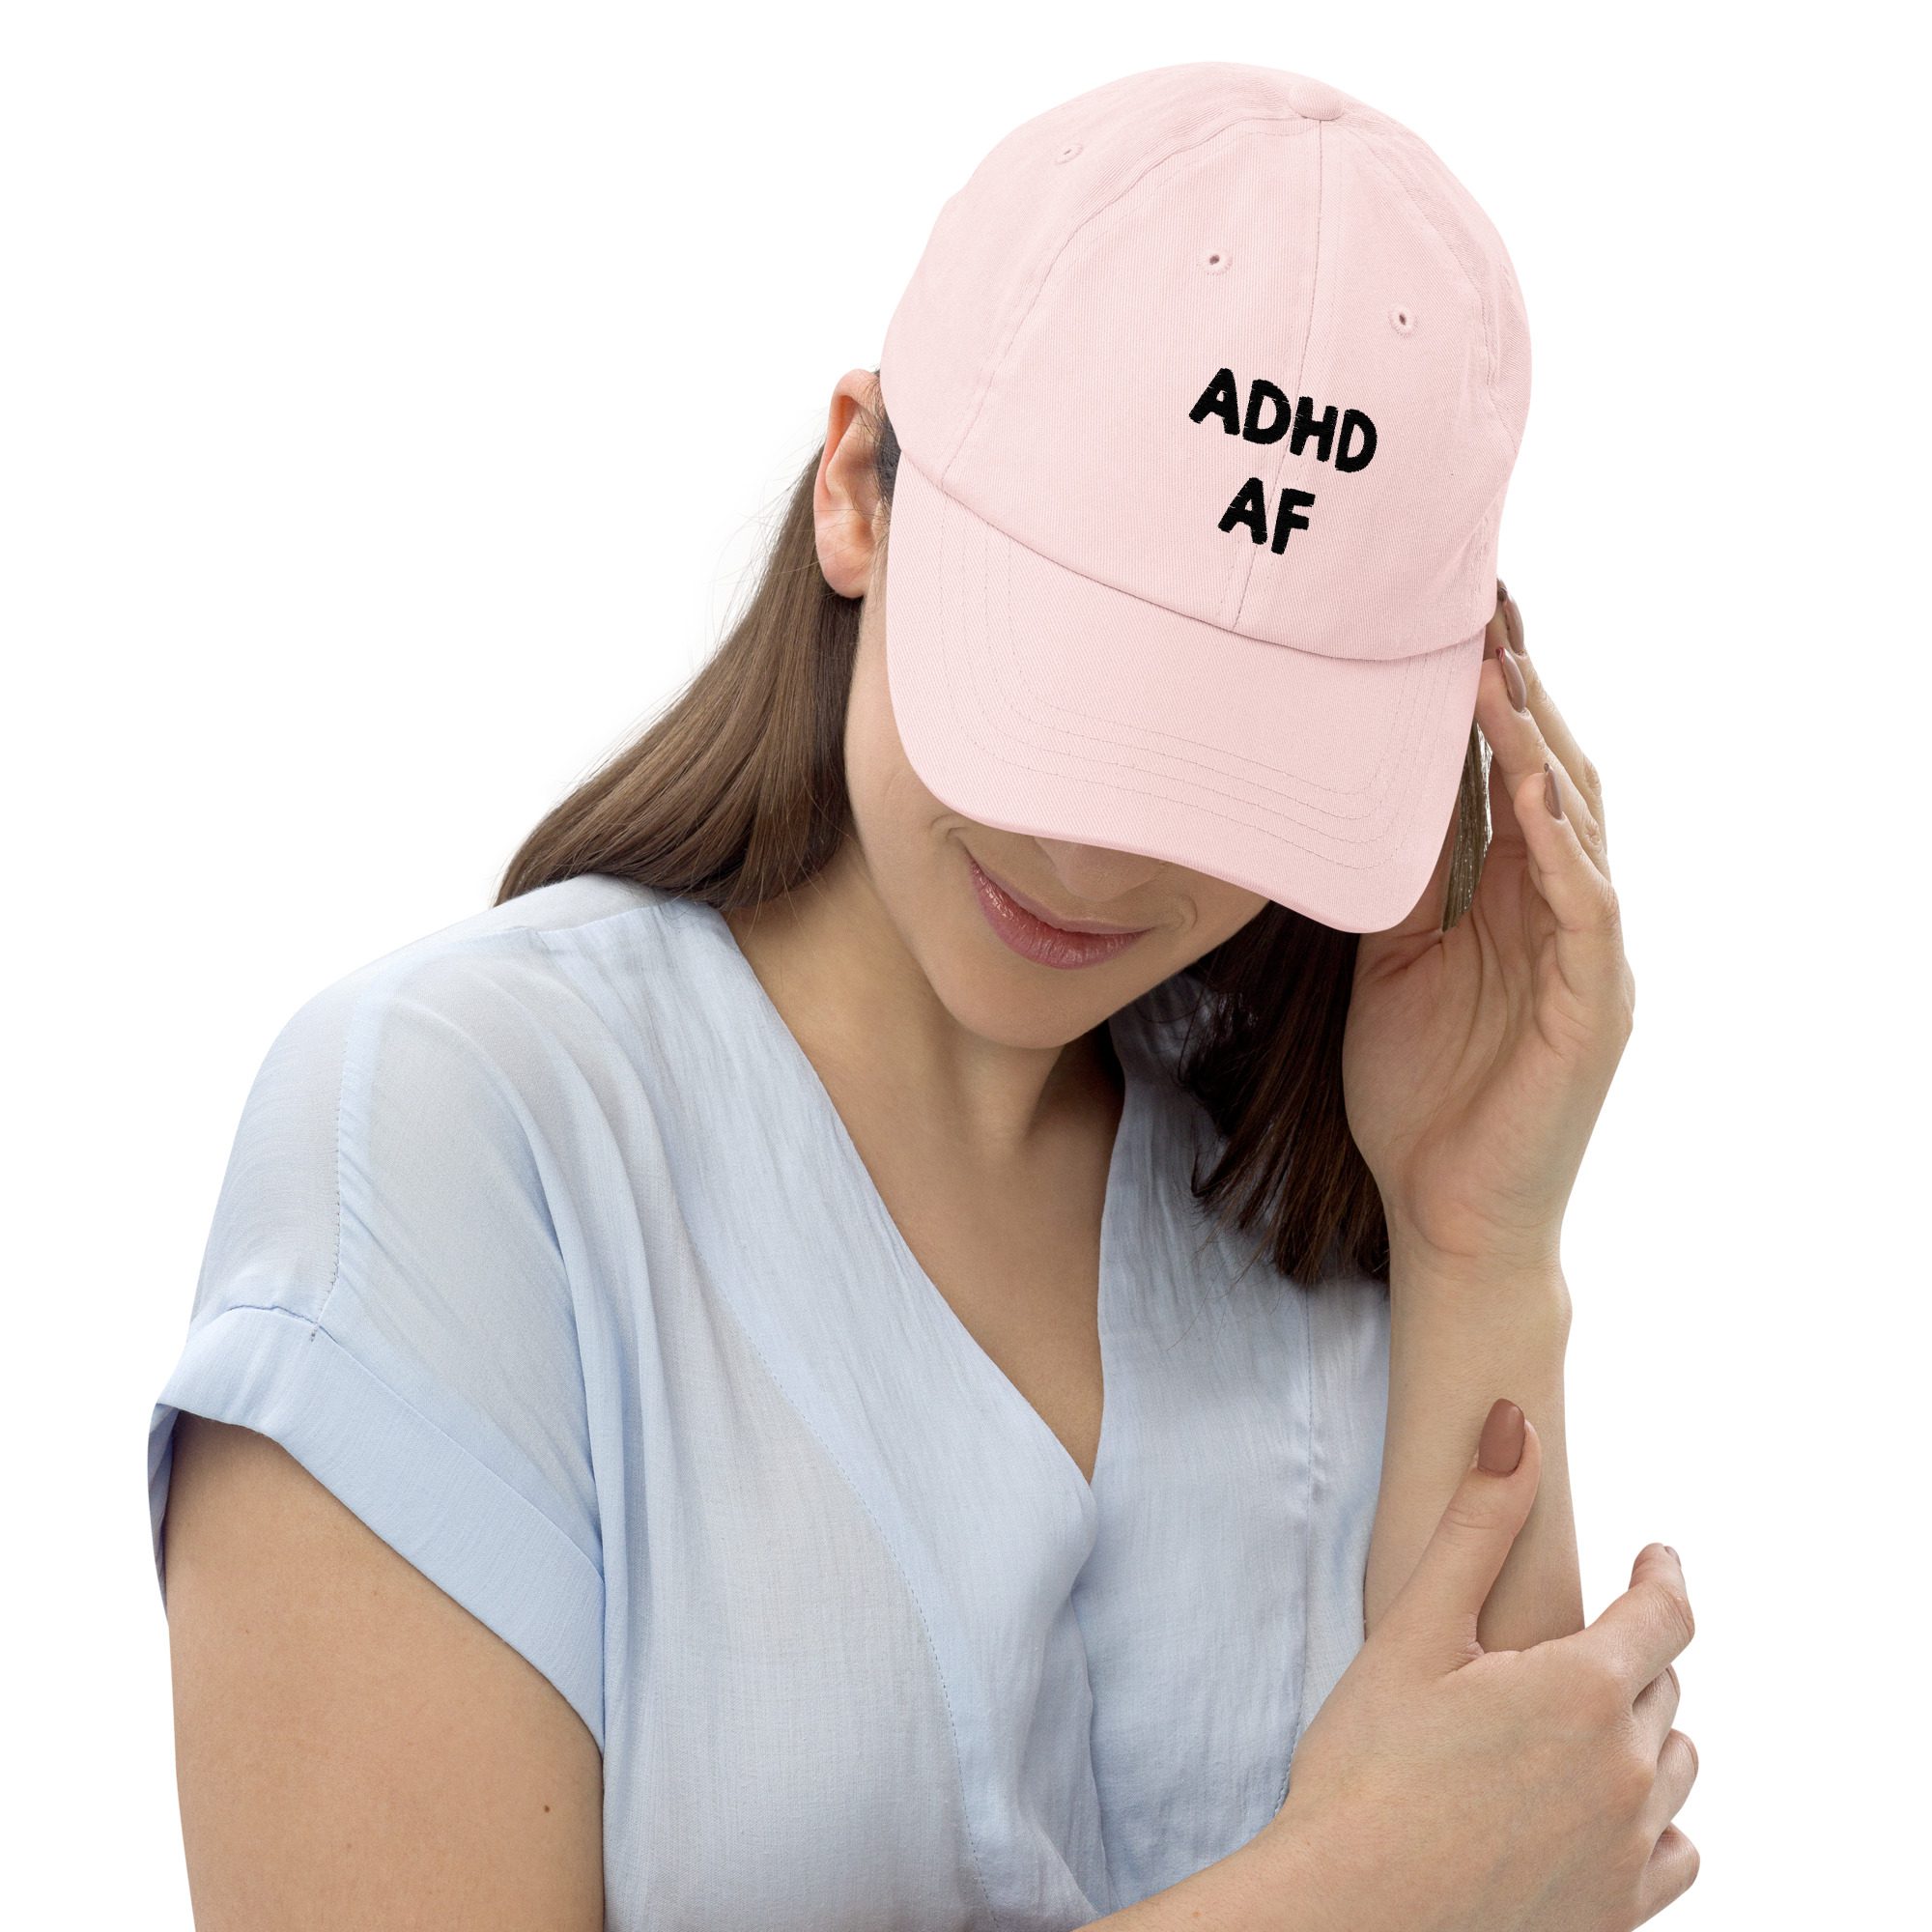 ADHD AF Pastel Baseball Hat